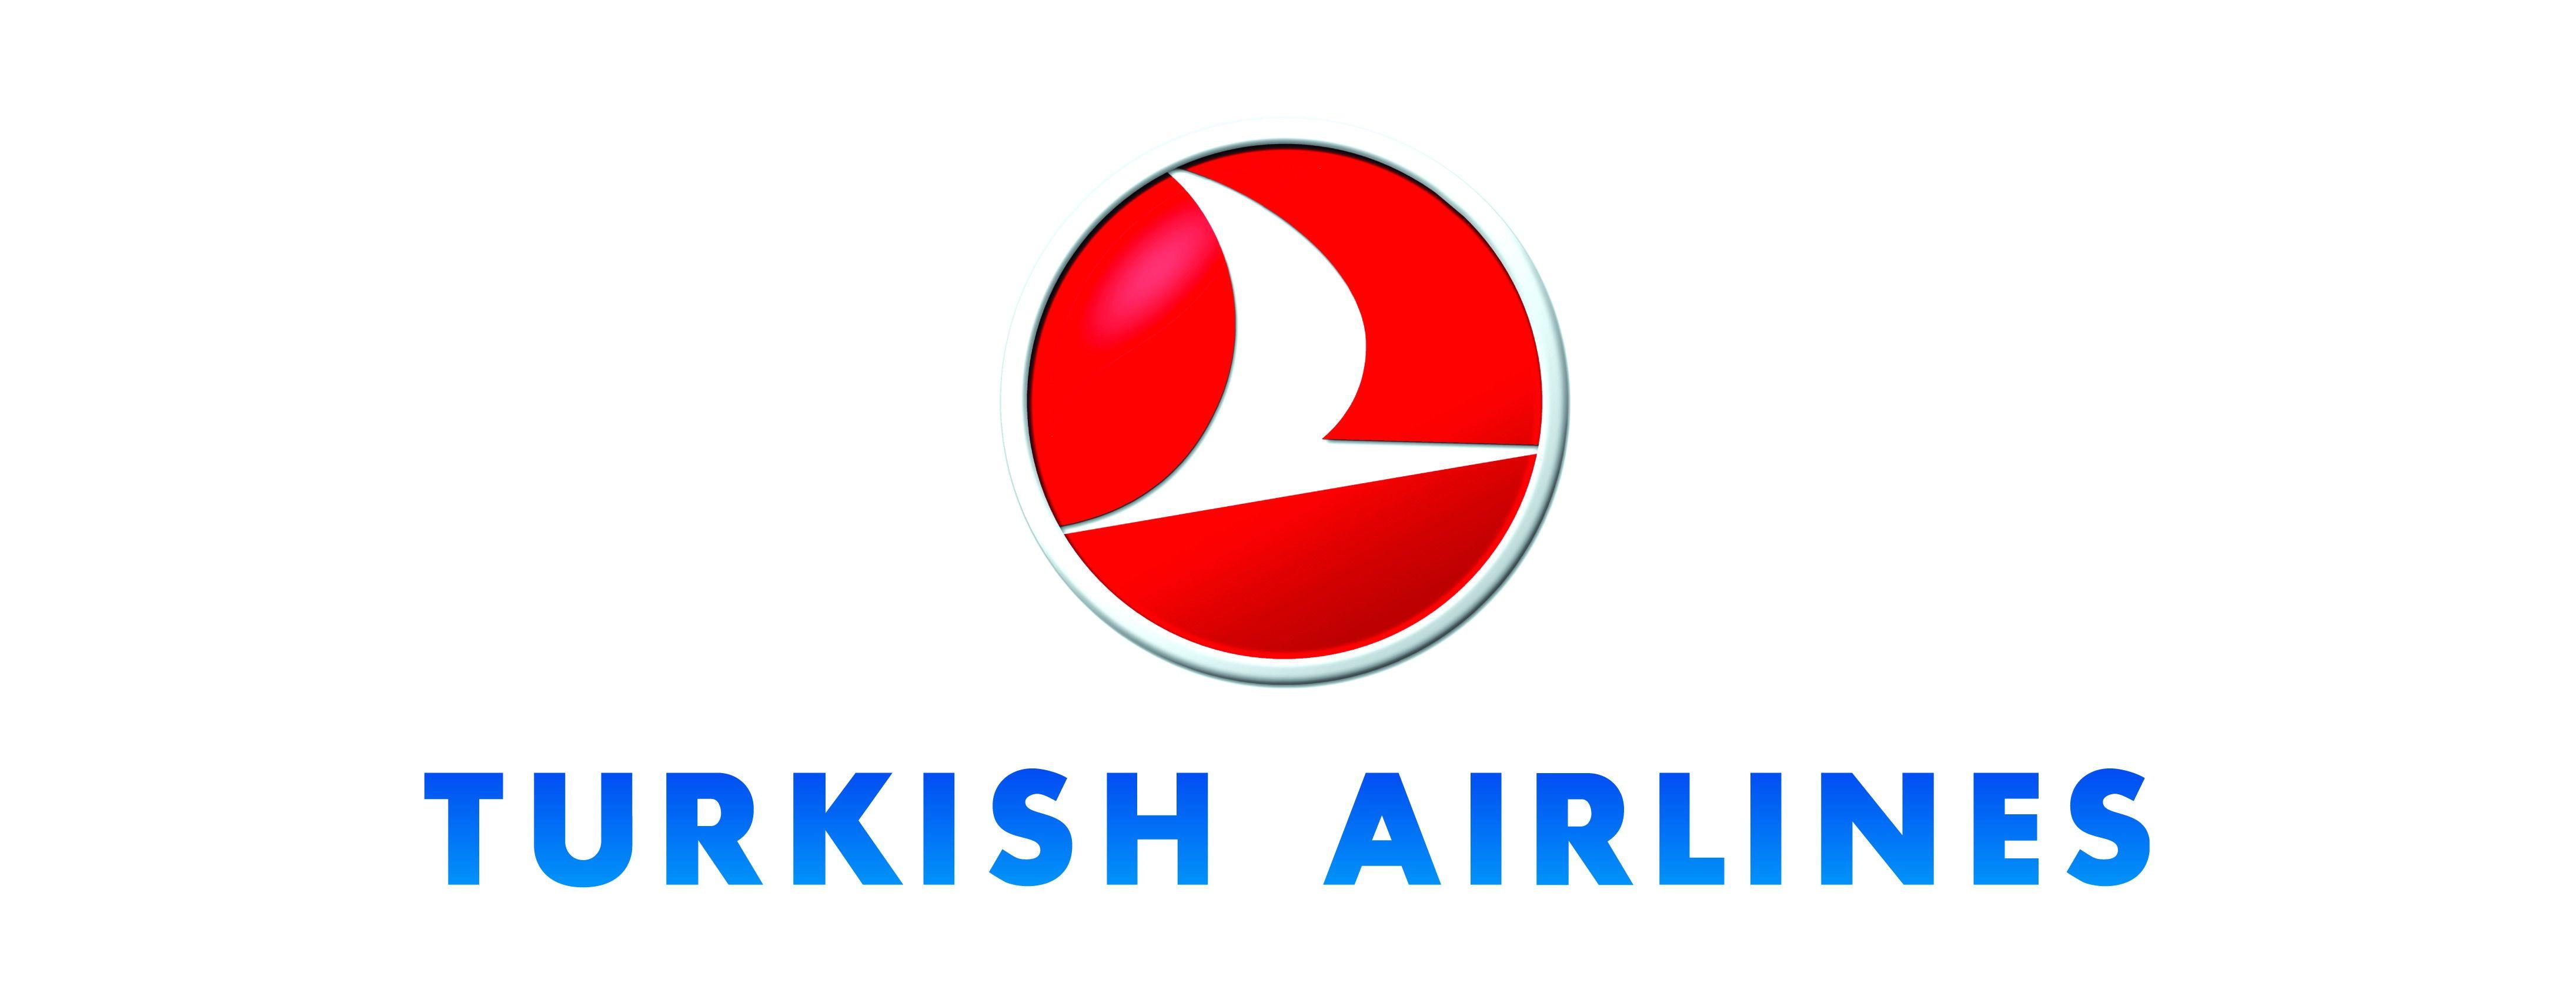 Turkish Airlines Logo - Pin by Surya la punaise on Airline logos in 2019 | Airline logo ...